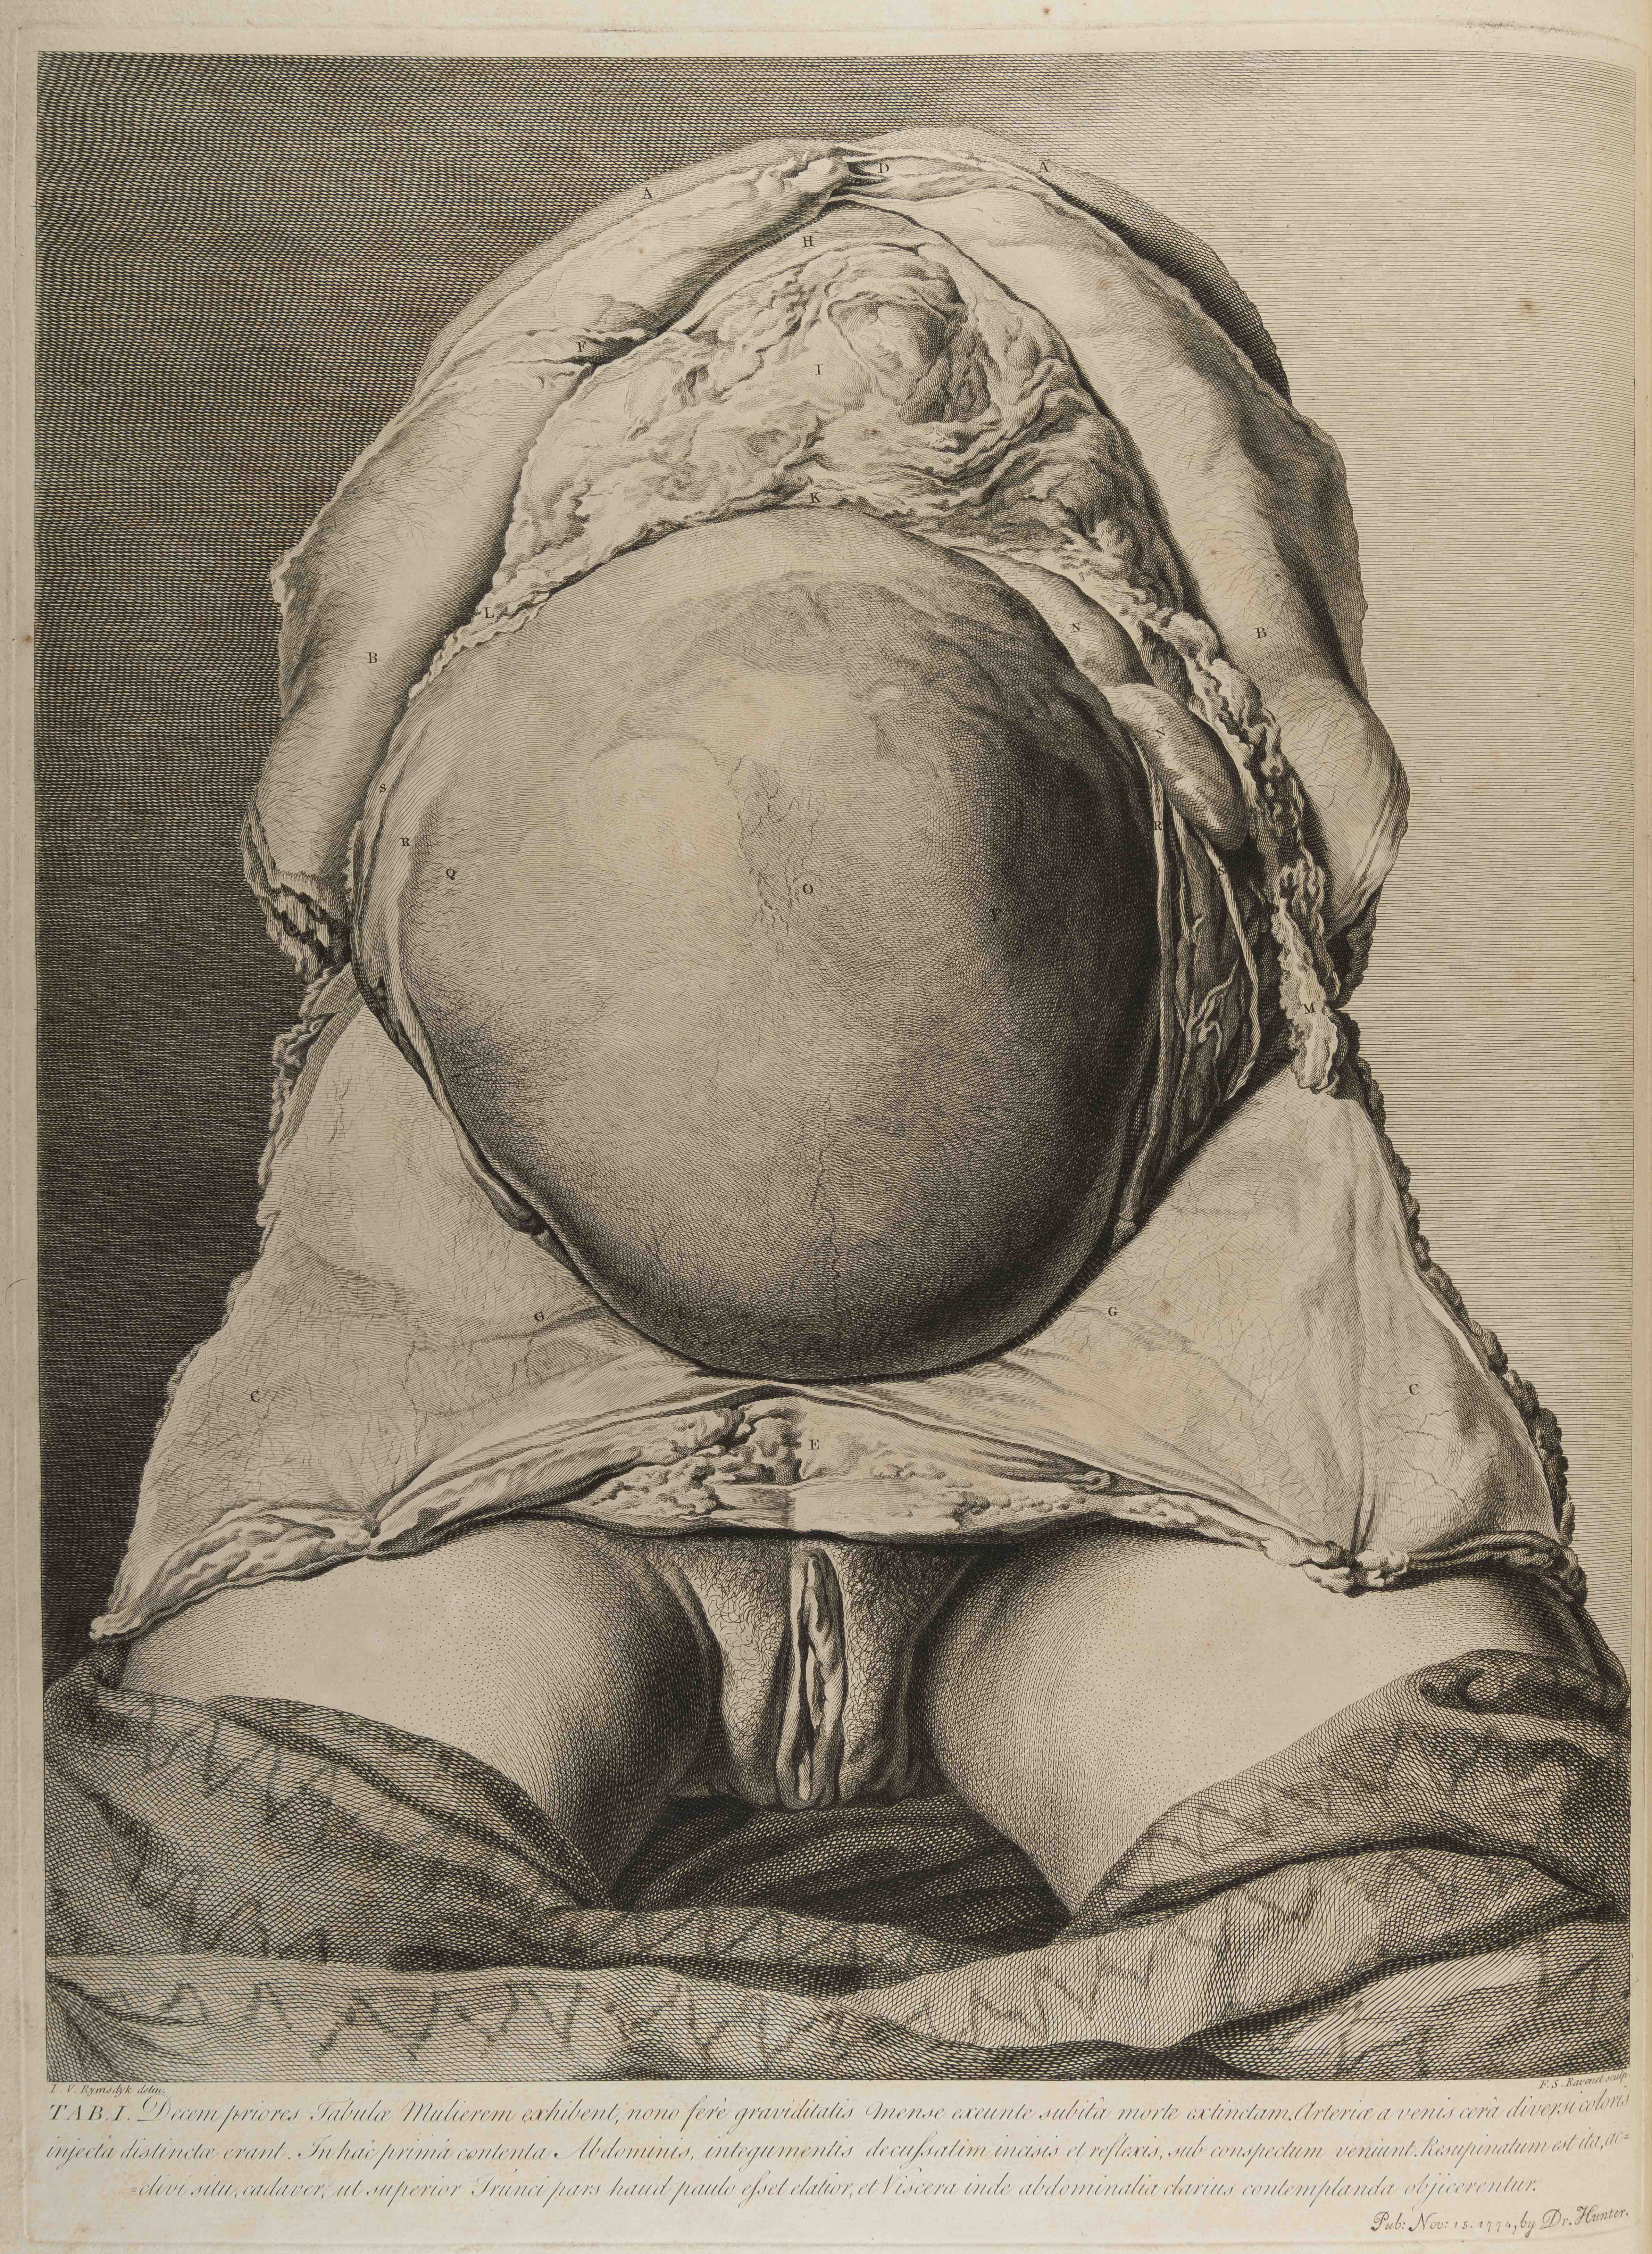 "Table 1 of William Hunter, Anatomia Uteri Humani Gravidi Tabulis Illustrata (Birmingham: John Baskerville, 1774), University of St Andrews Library, rfx QM421.H8."